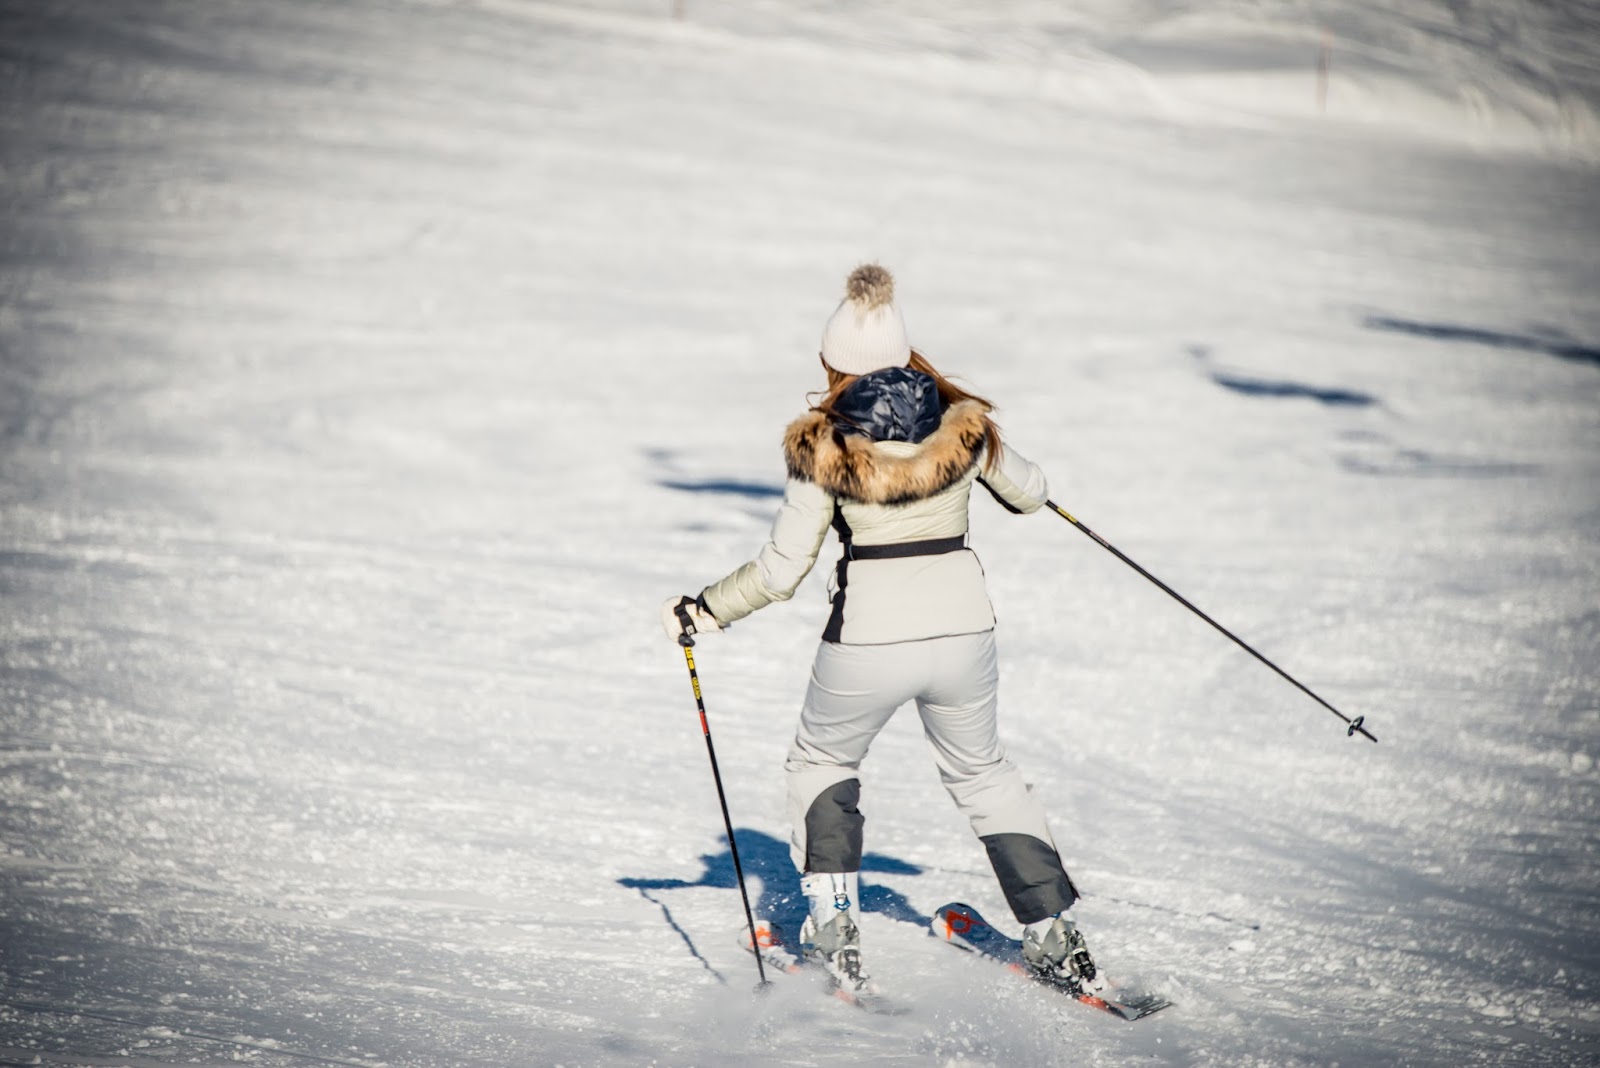 verbier-skiing-luxury-moncler-ski-suit-hanushka-toni